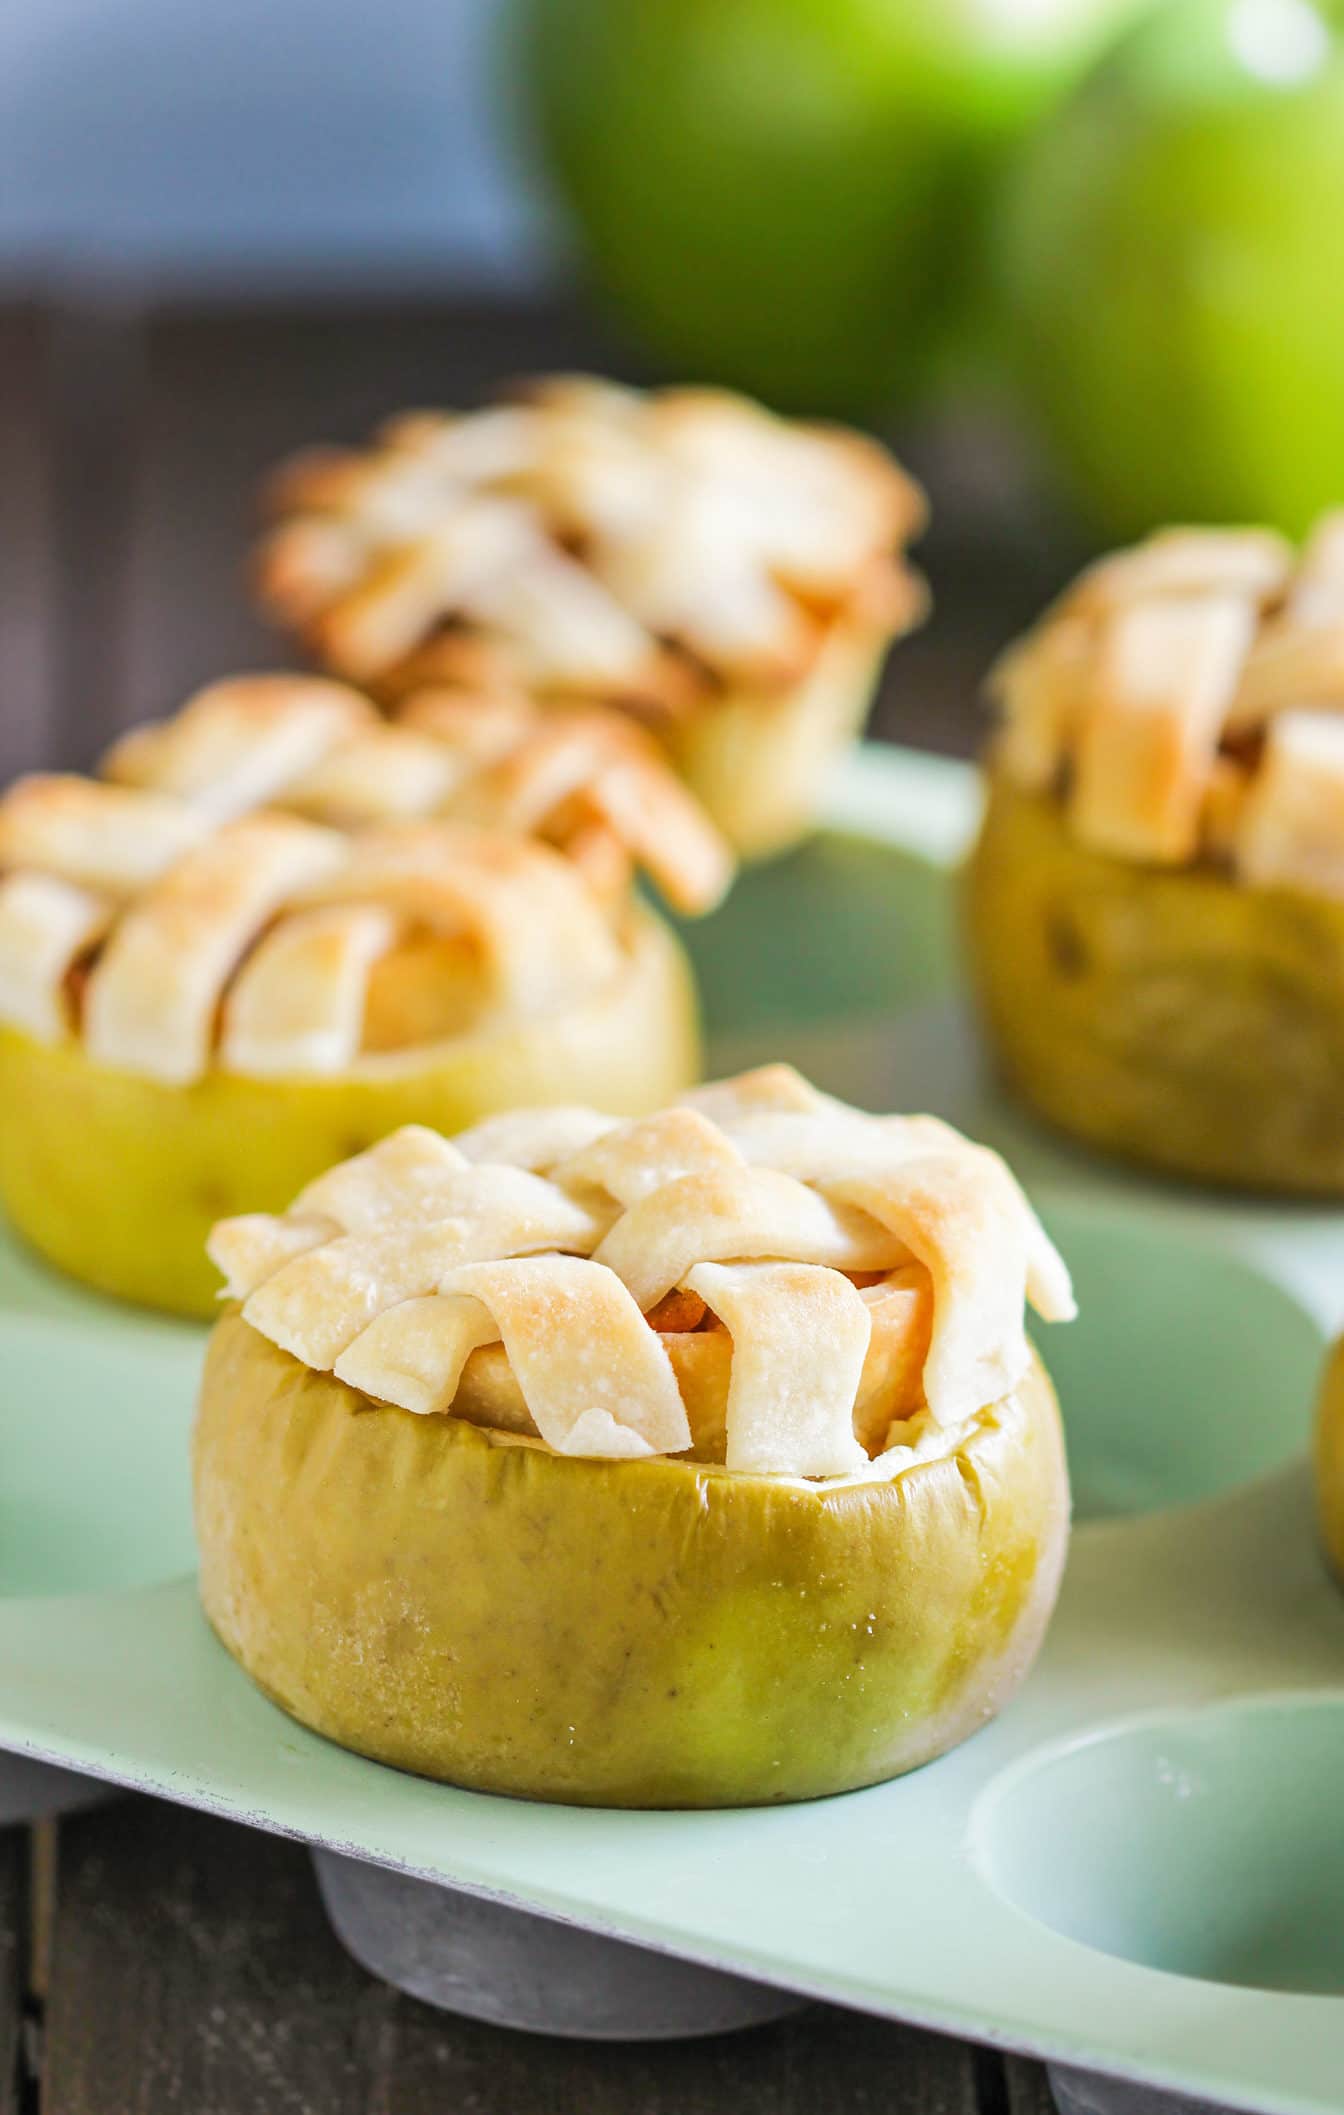 Healthy Apple Pies served IN THE APPLE! (low fat, low sugar, vegan)